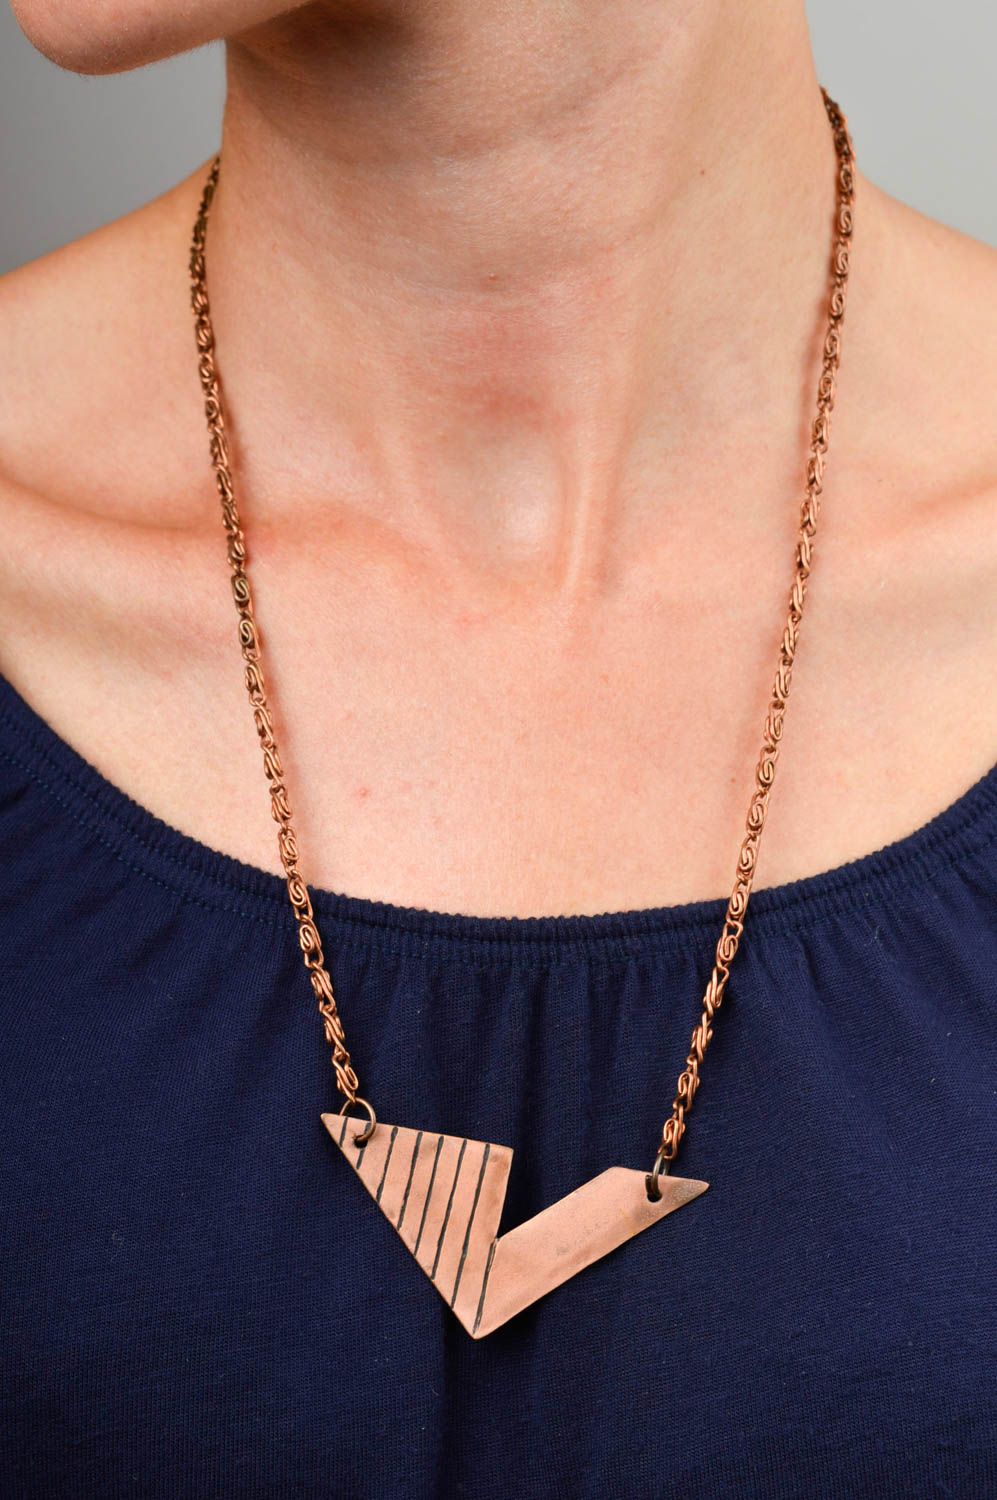 Handmade copper female pendant stylish metal pendant elegant jewelry gift ideas photo 1